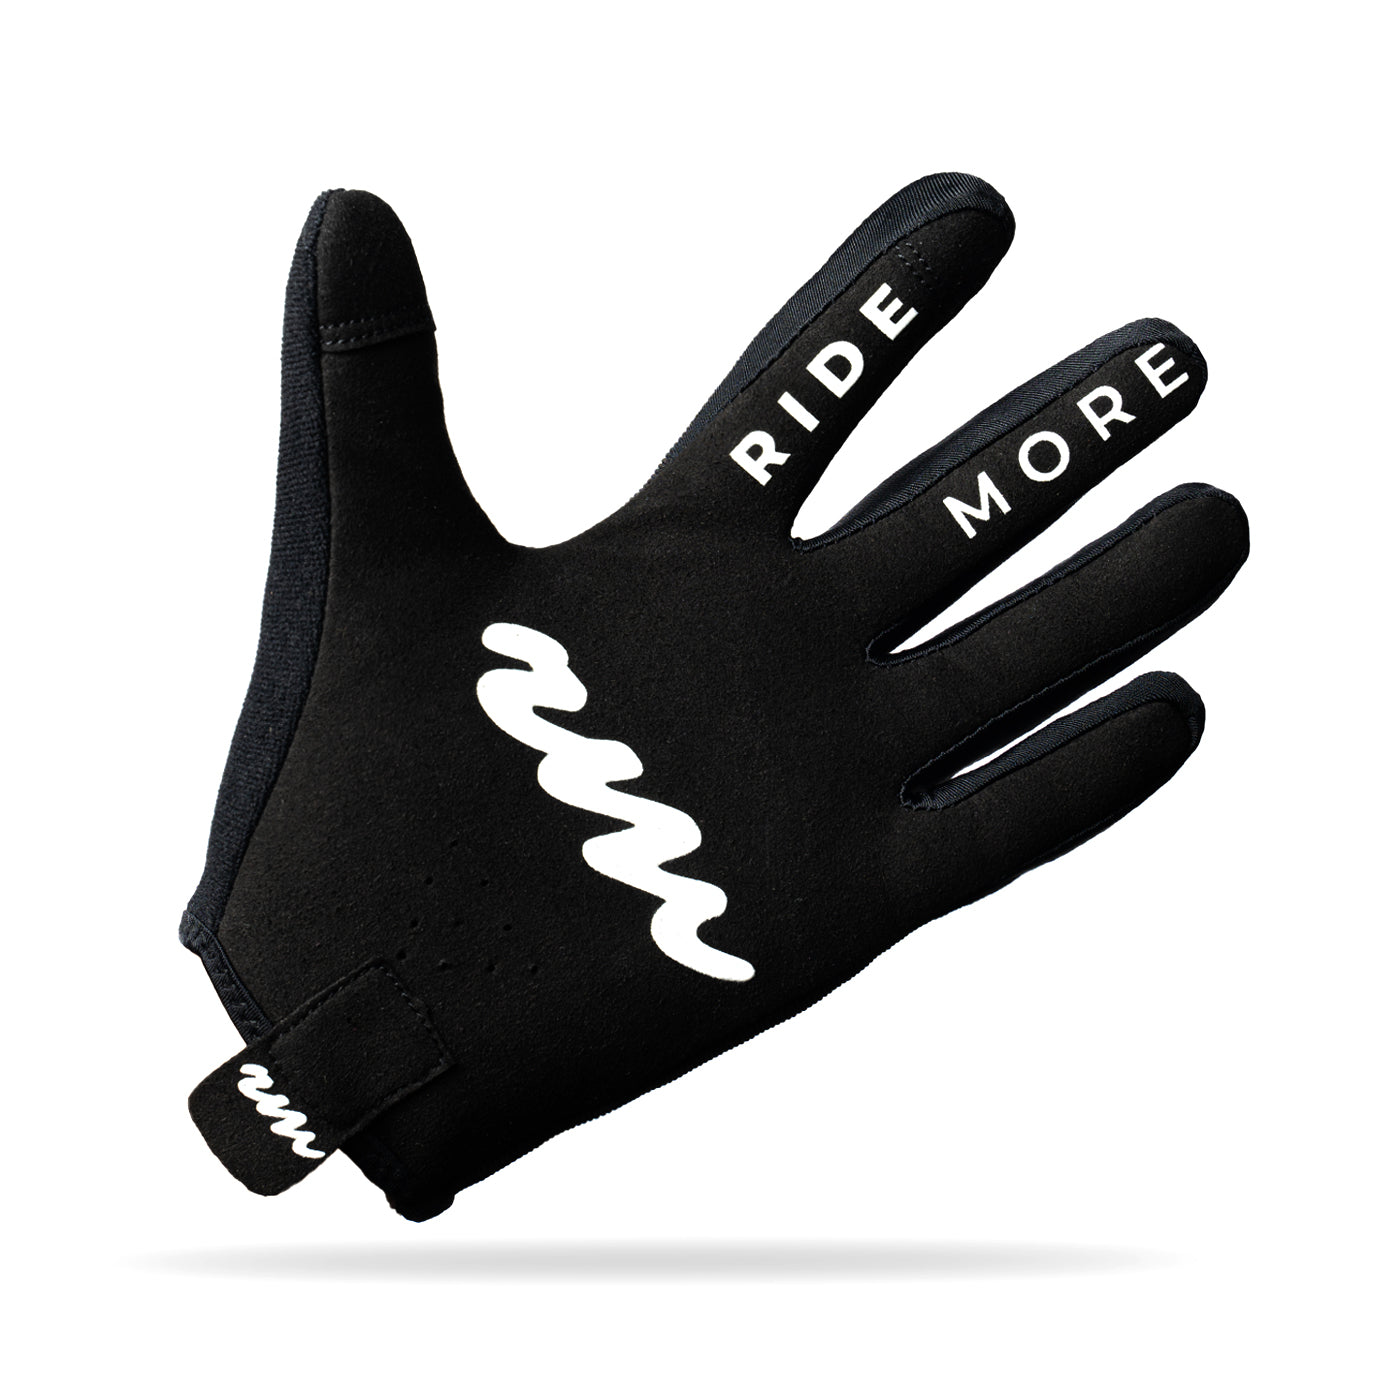 Roller Handschuhe| gut Griff, slip-on | Ride More Protection